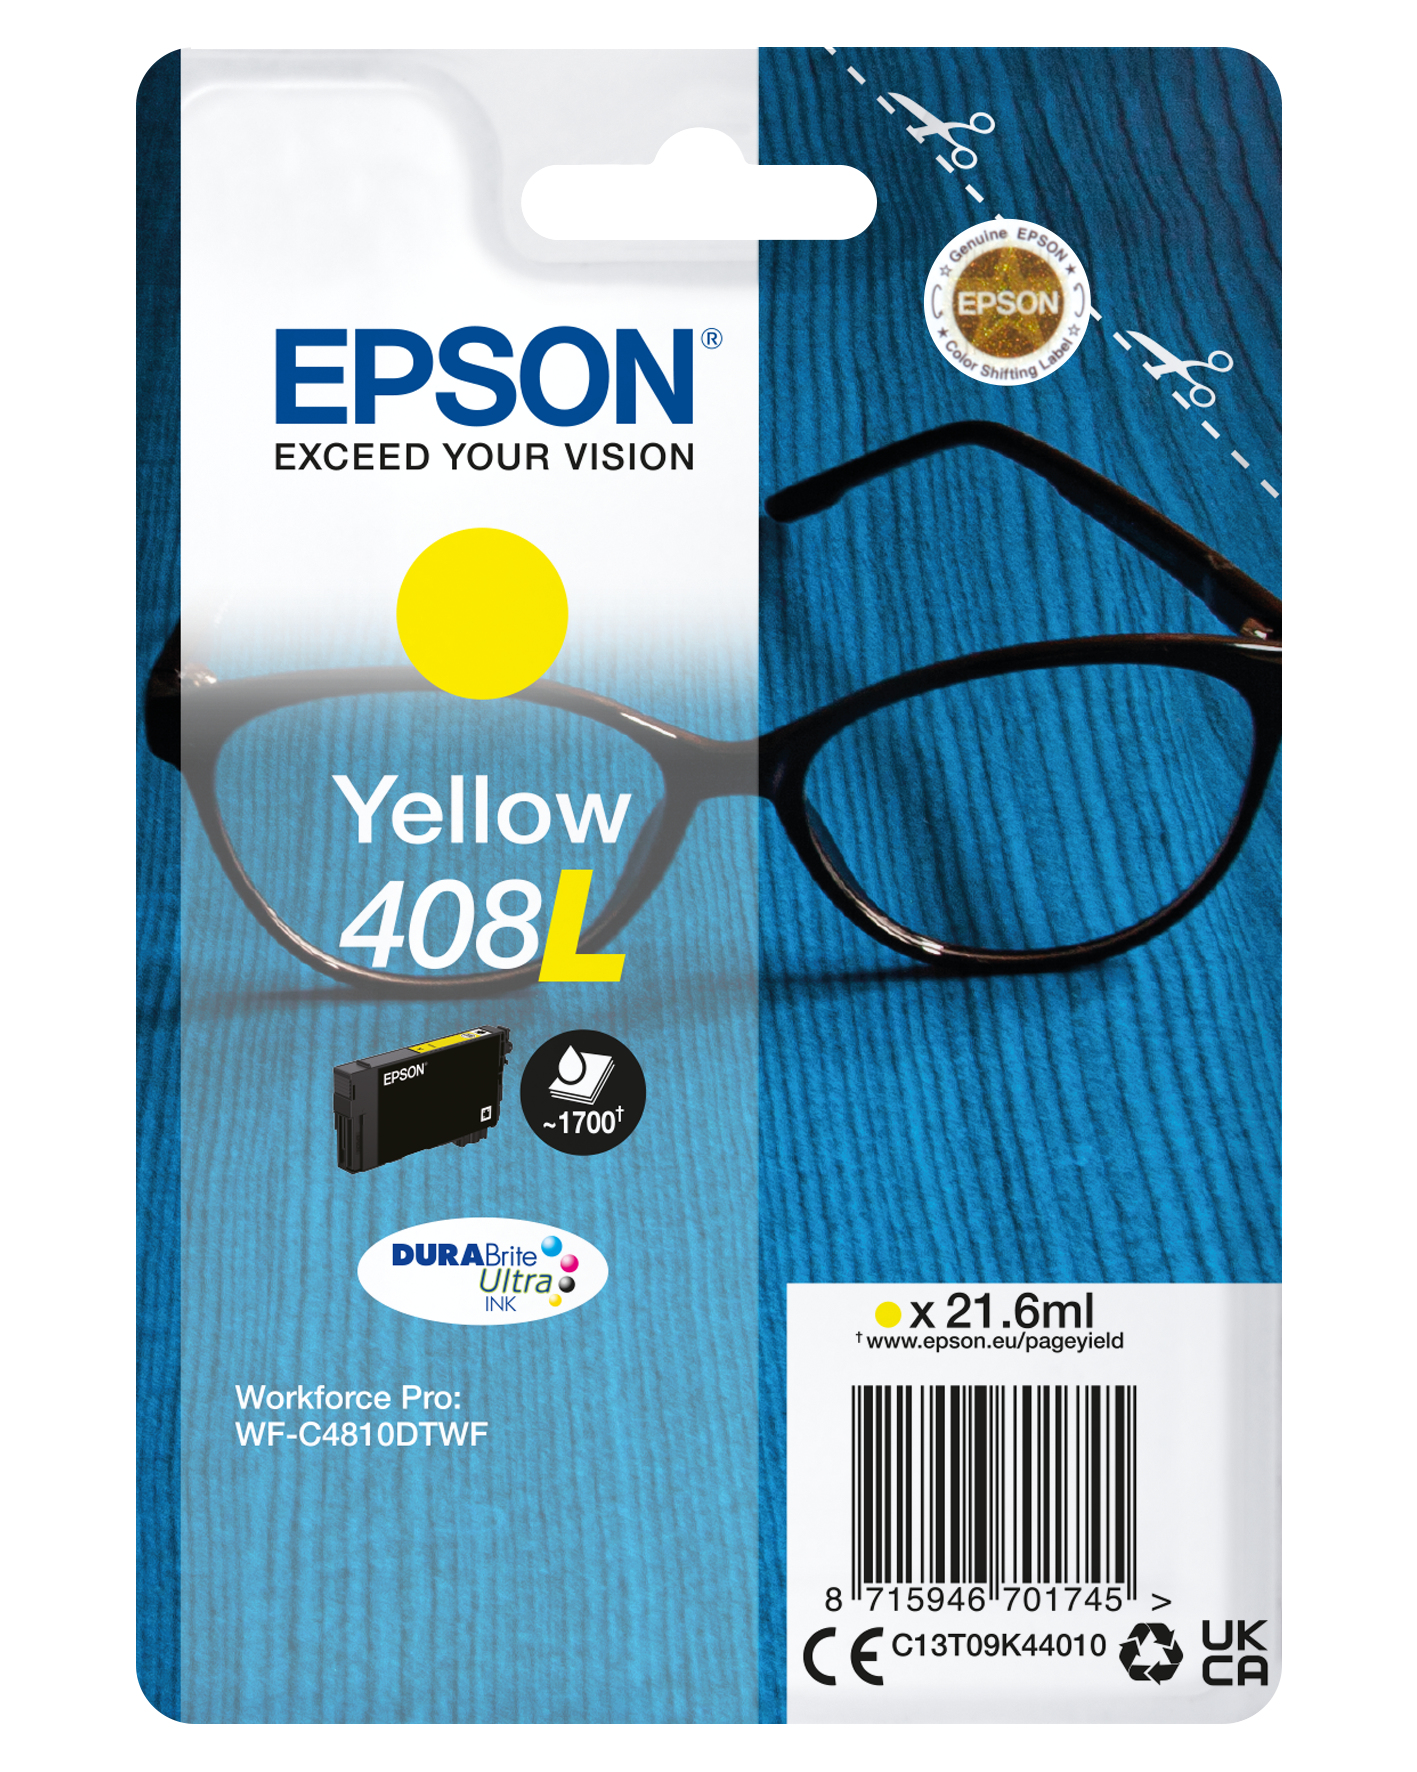 Epson Ink/Singlepack Yellow 408L DURABrite Ult